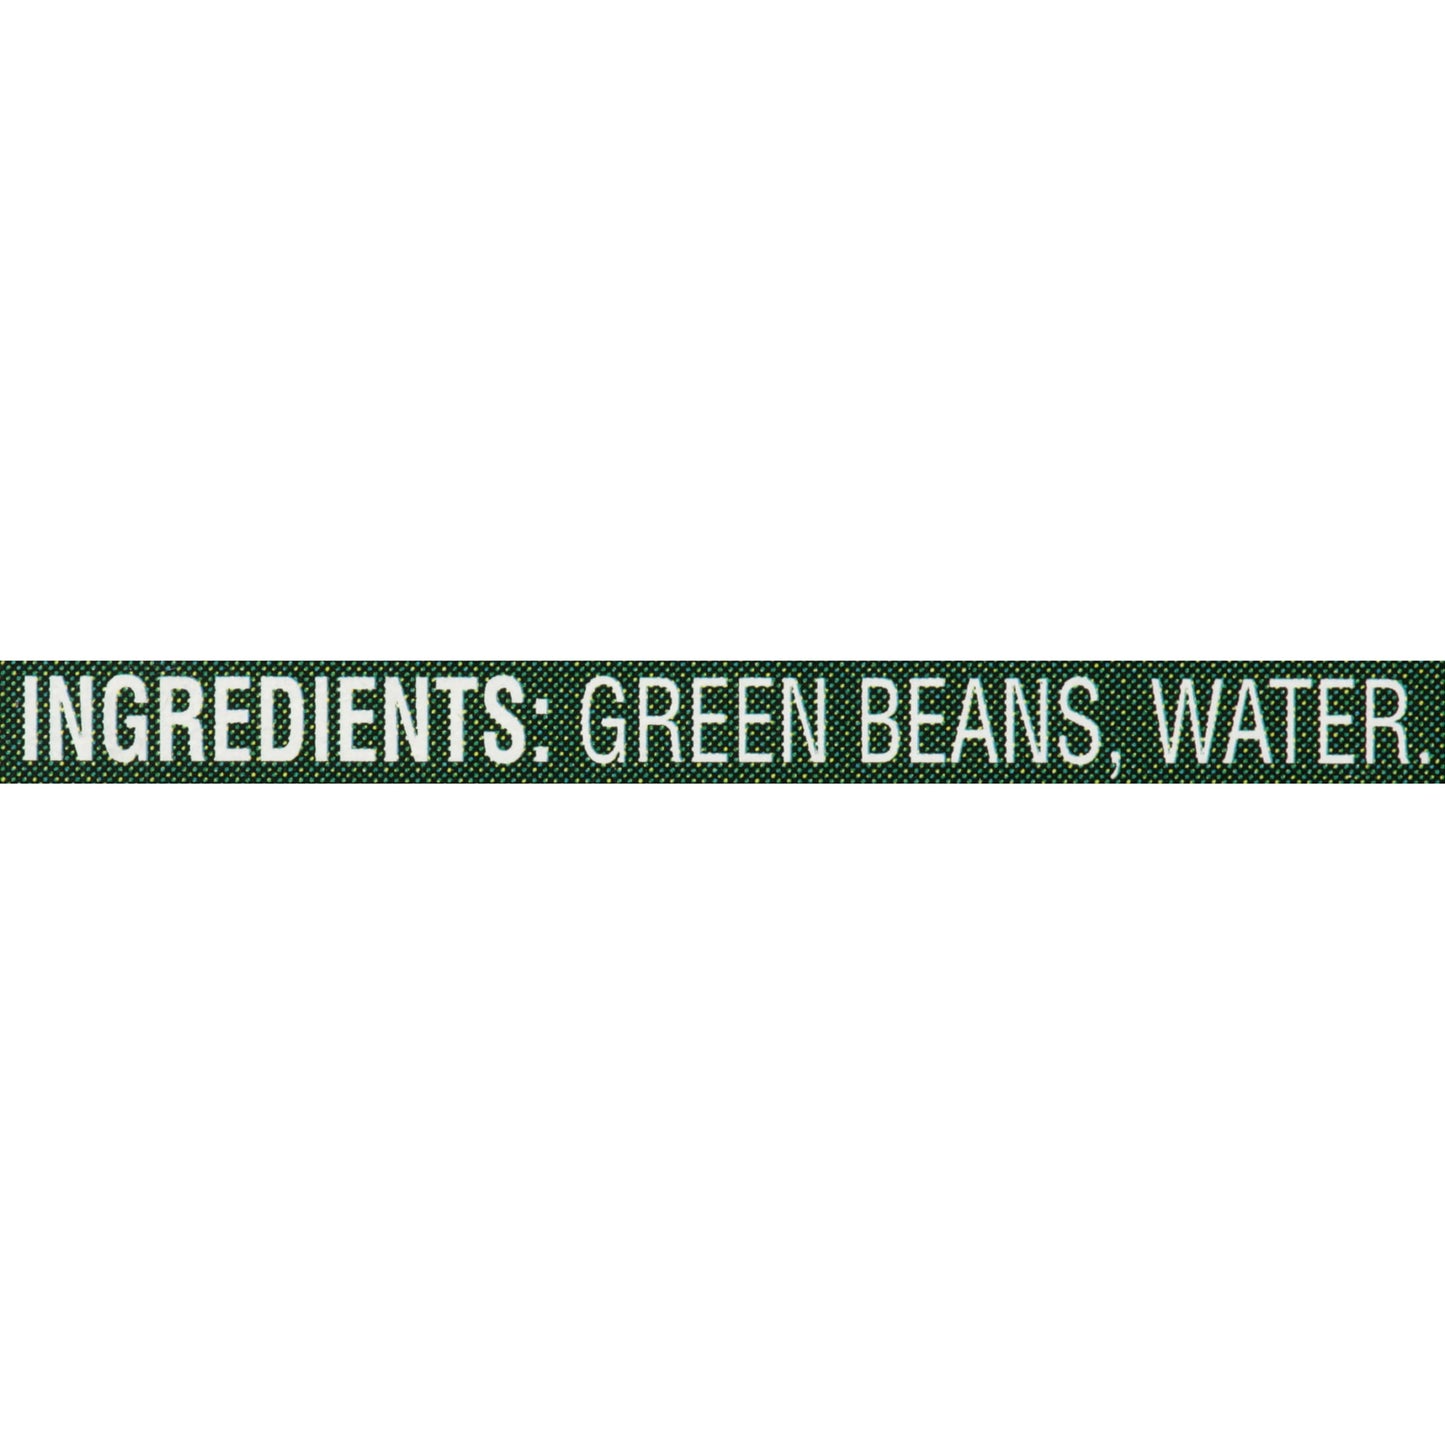 (4 Cans)  Green Beans No Salt Added, 14.5 Oz Can